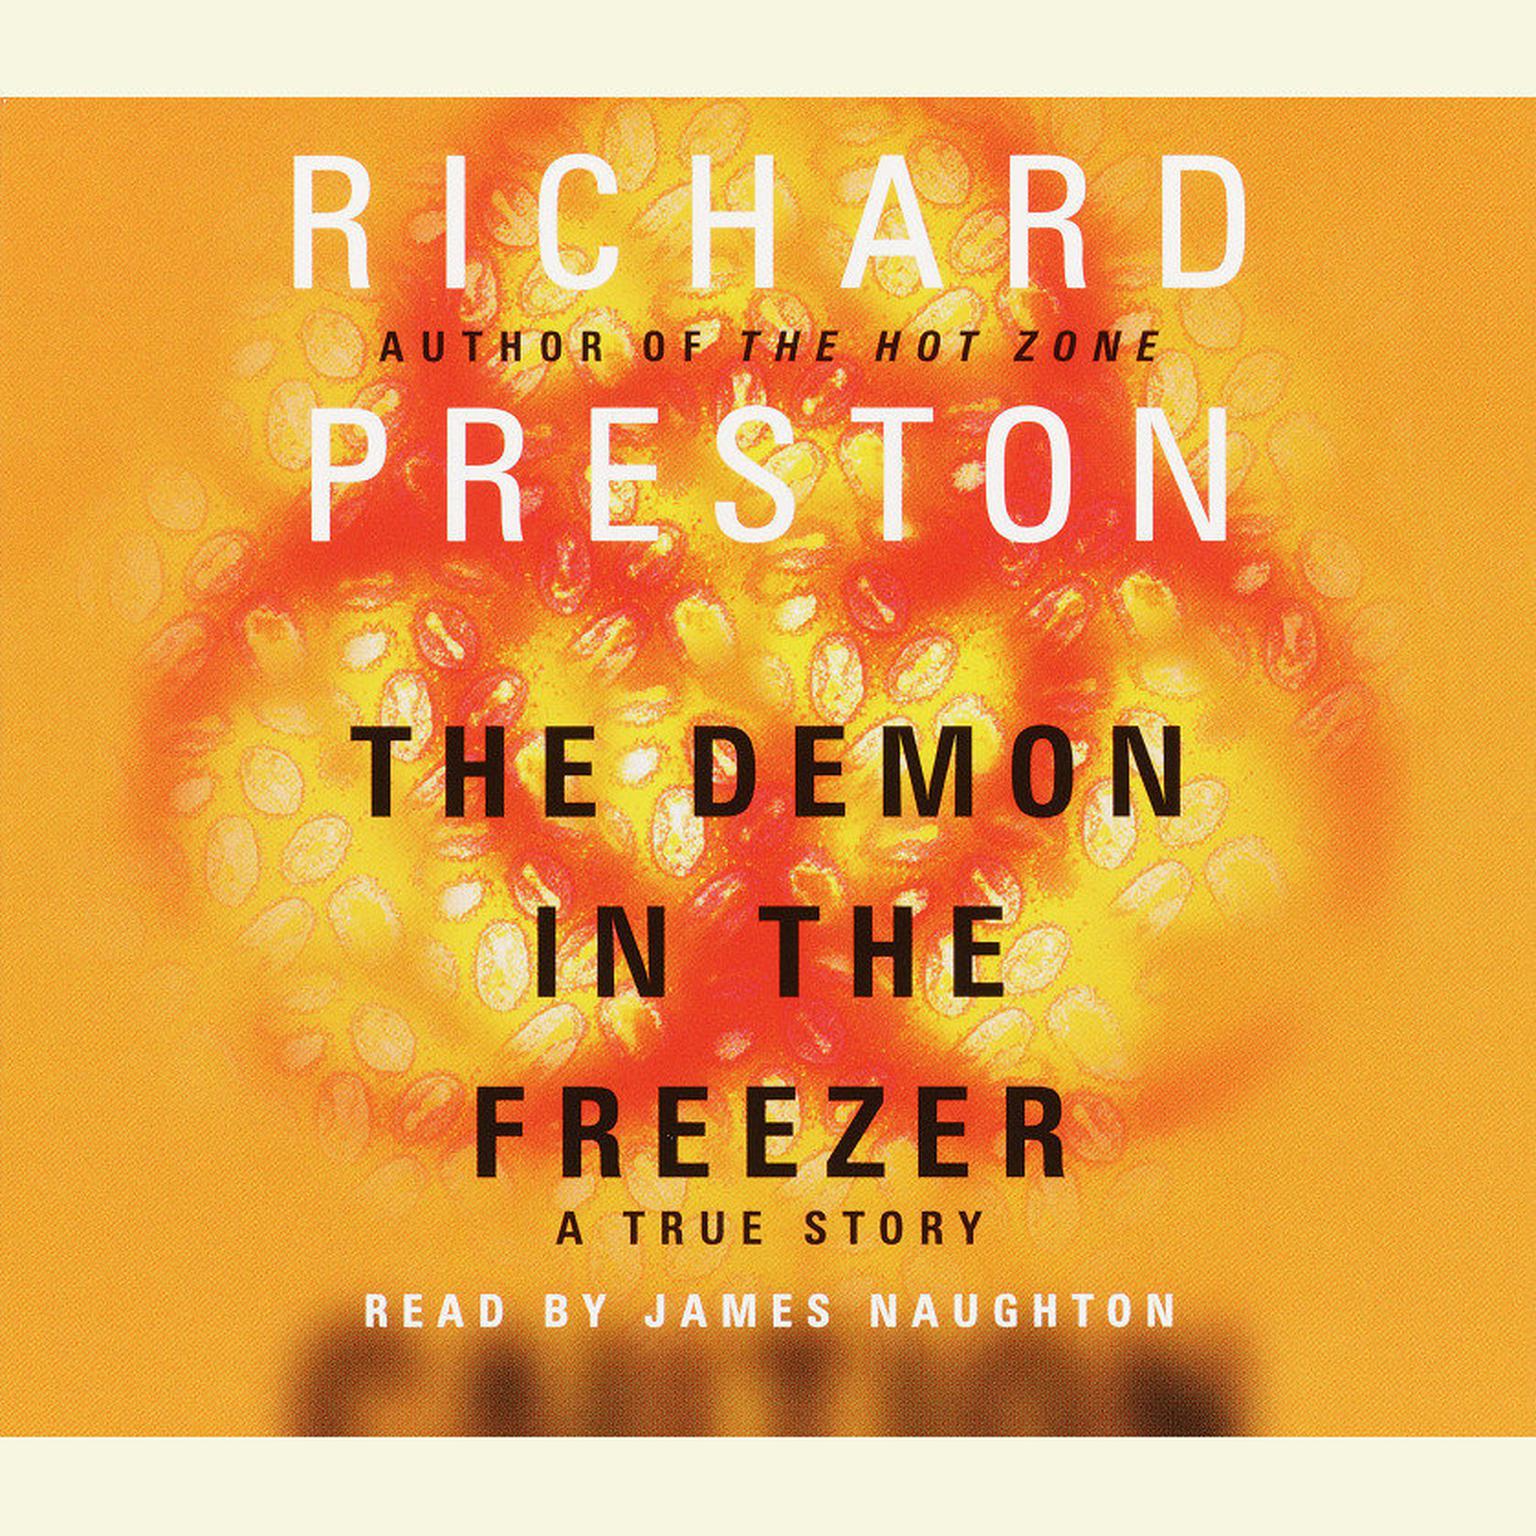 The Demon in the Freezer (Abridged): A True Story Audiobook, by Richard Preston